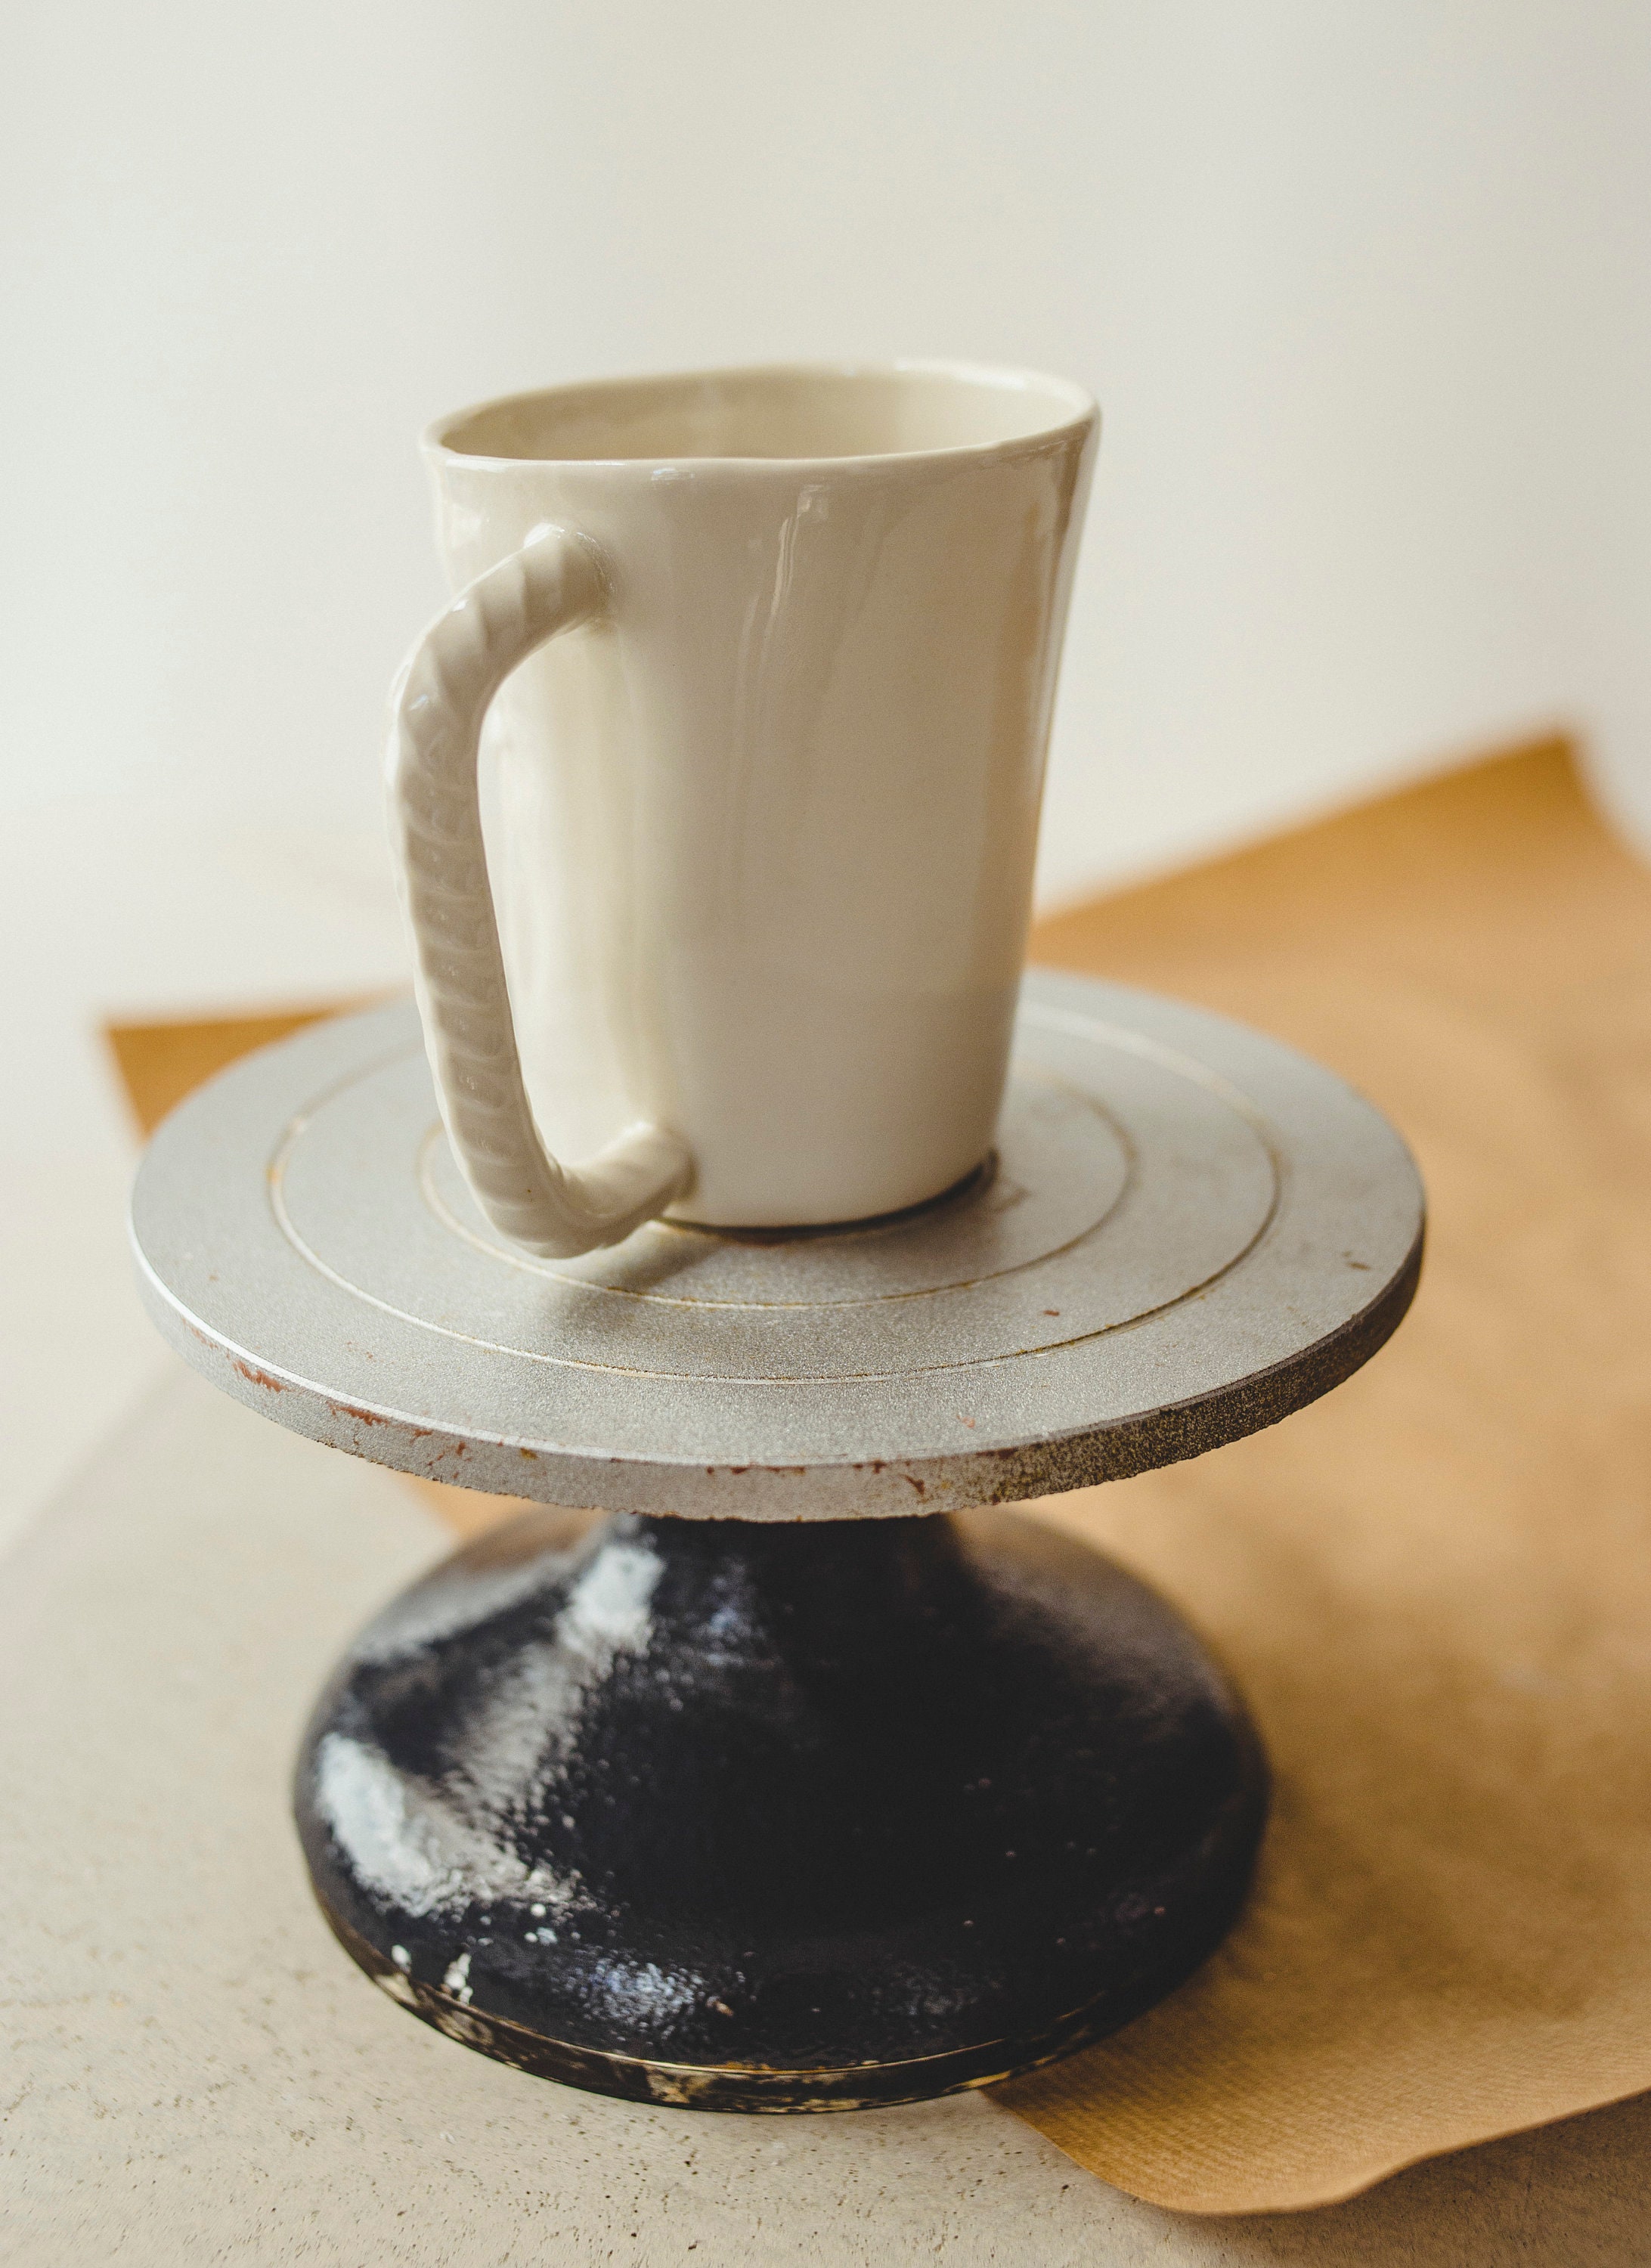 Aoibox 21 oz. Ceramic Coffee Mug, Handmade Pottery Big Tea Cup for Office and Home, Deep Blue